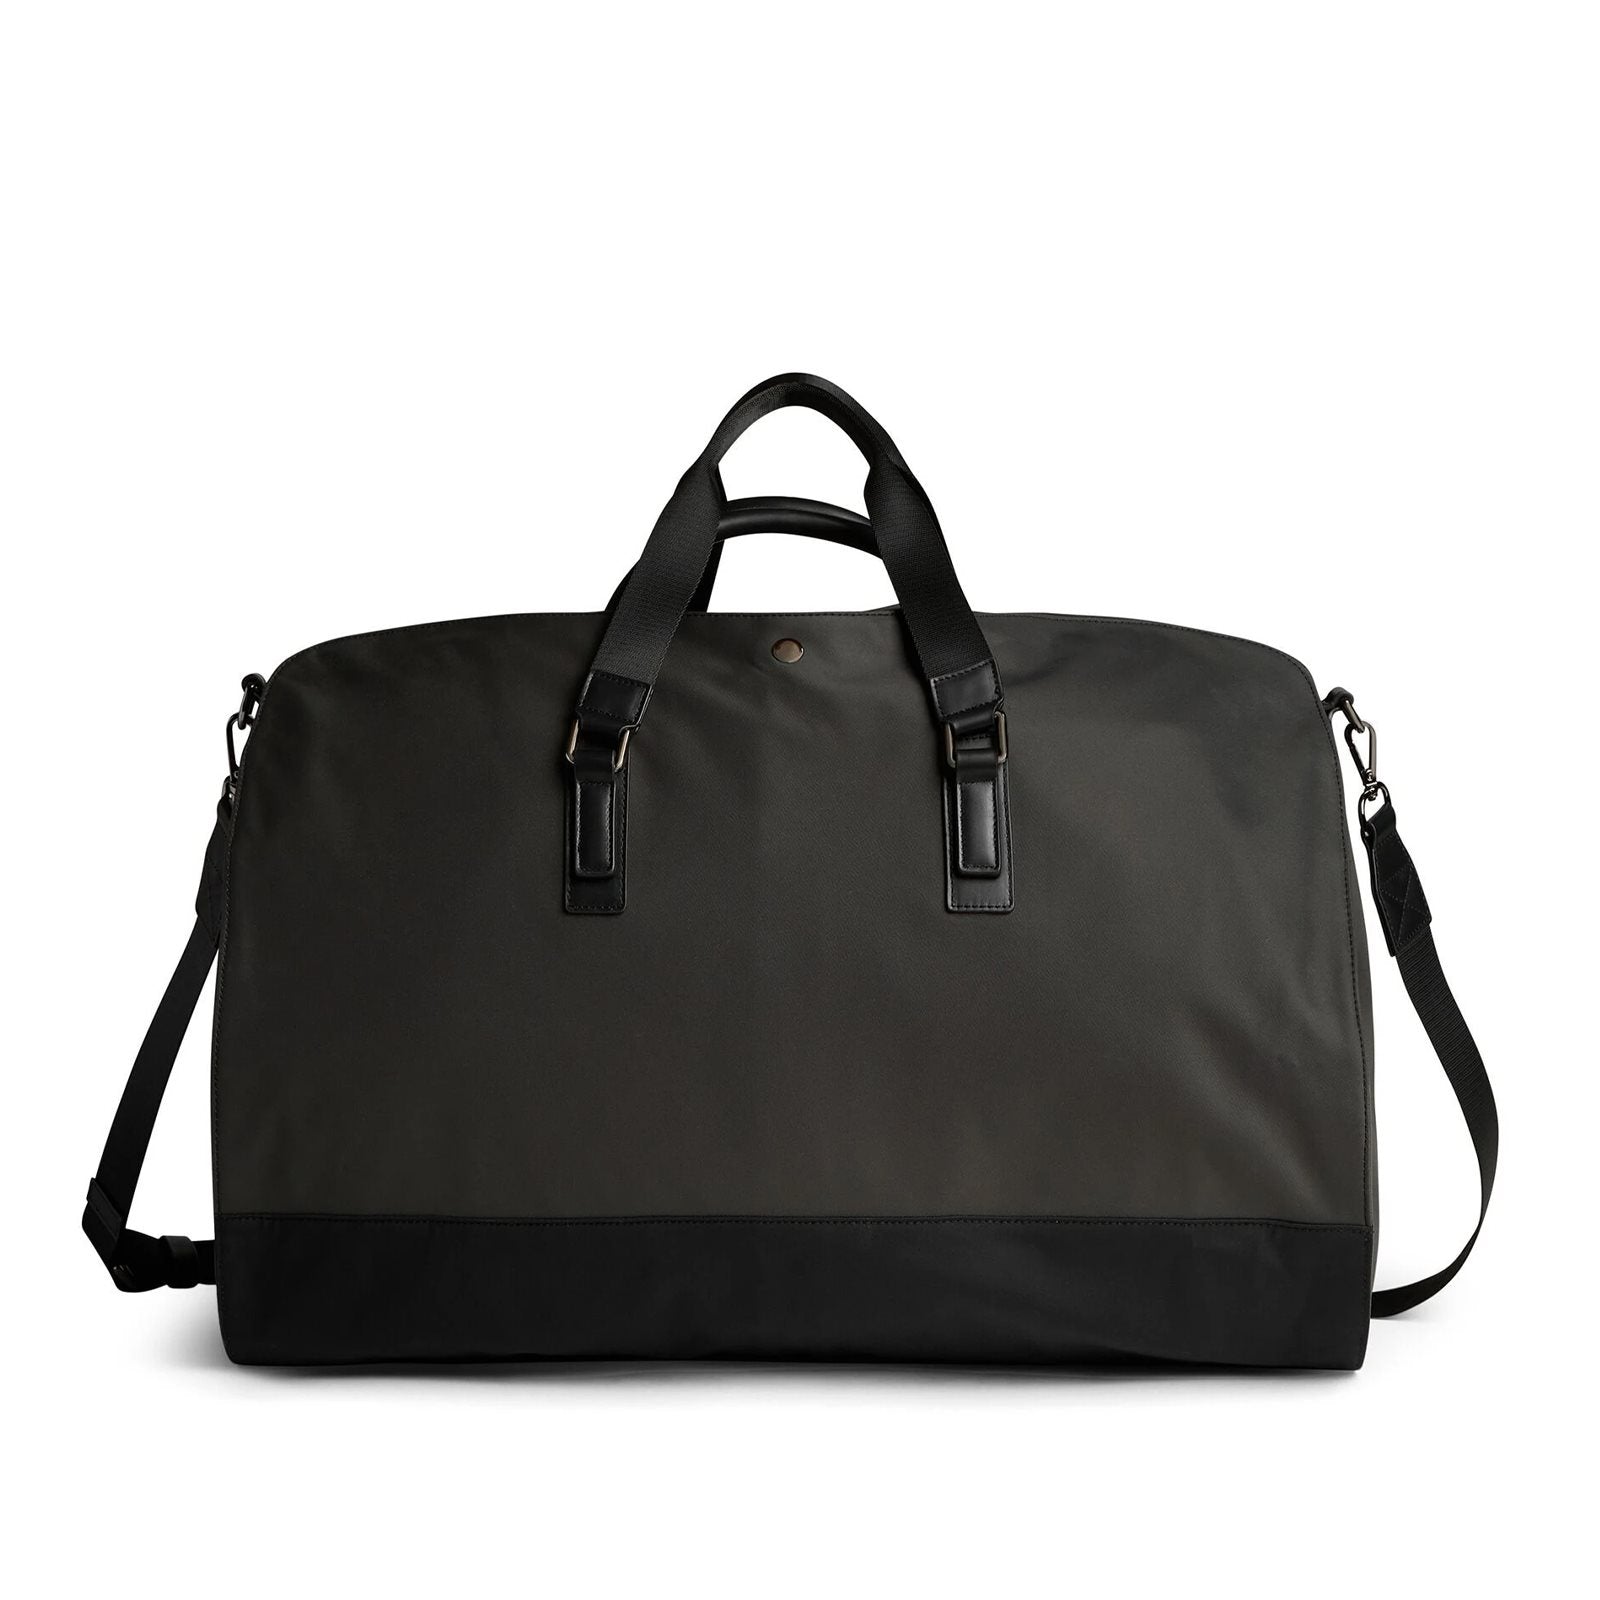 Nylon zipped travel bag